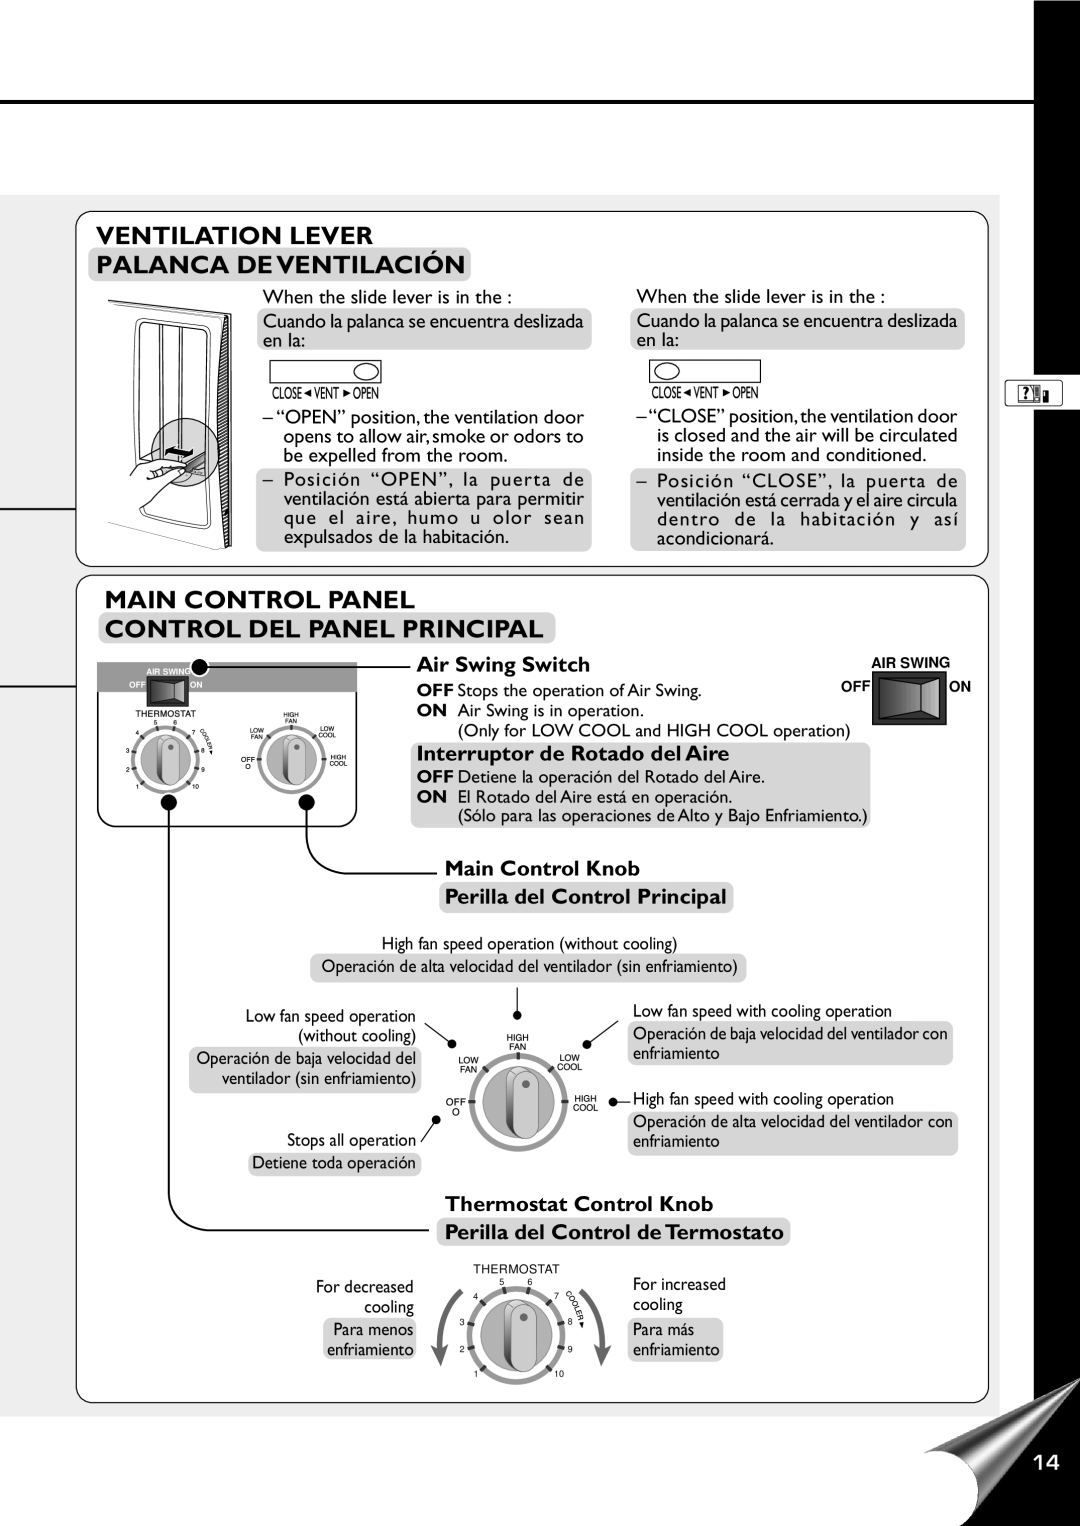 Panasonic HQ-2201SH manual Ventilation Lever Palanca De Ventilación, Main Control Panel Control Del Panel Principal 